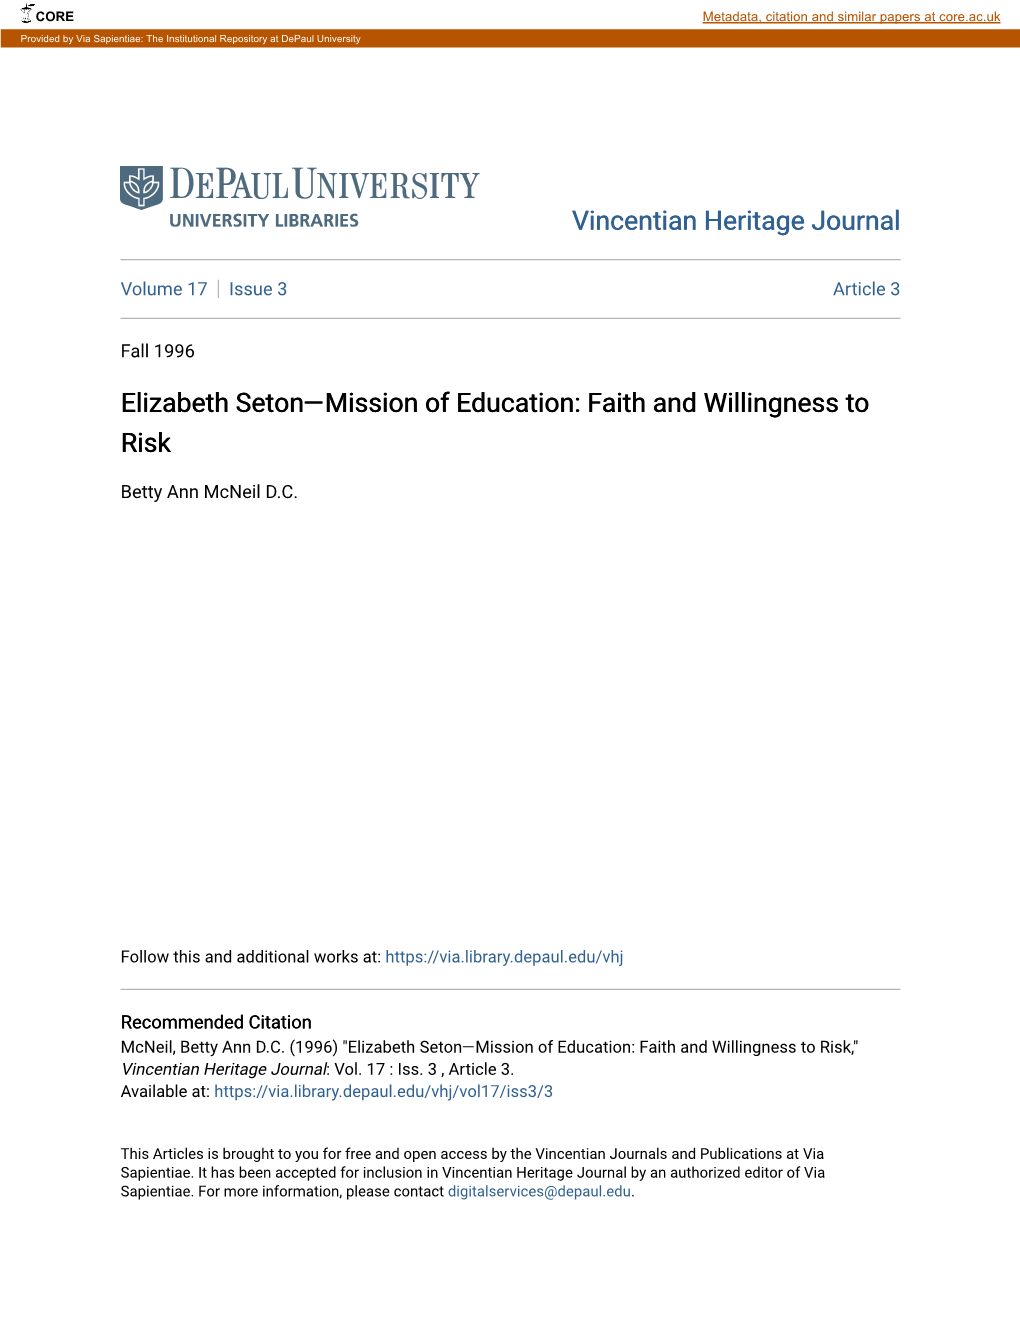 Elizabeth Seton—Mission of Education: Faith and Willingness to Risk